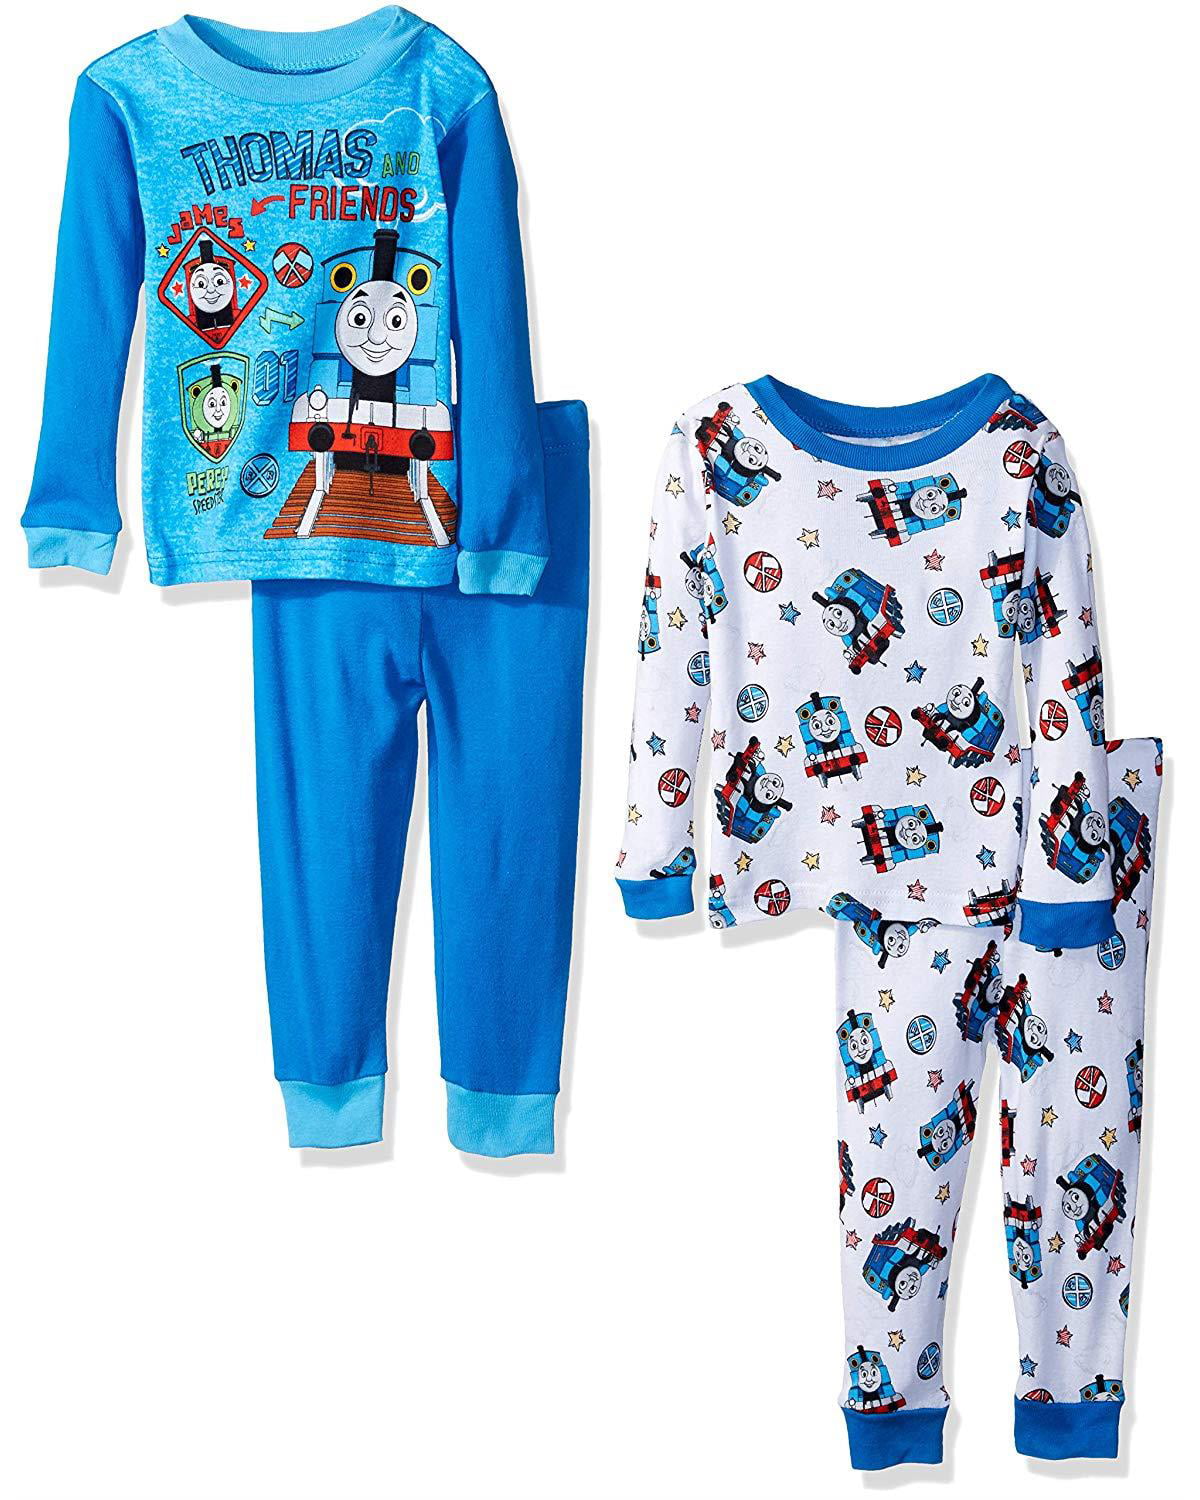 Sizes 3T & 4T Blue/Multi Thomas The Train Toddler Boys 4PC Pajama Sleepwear Set Blue/Multi, 3T